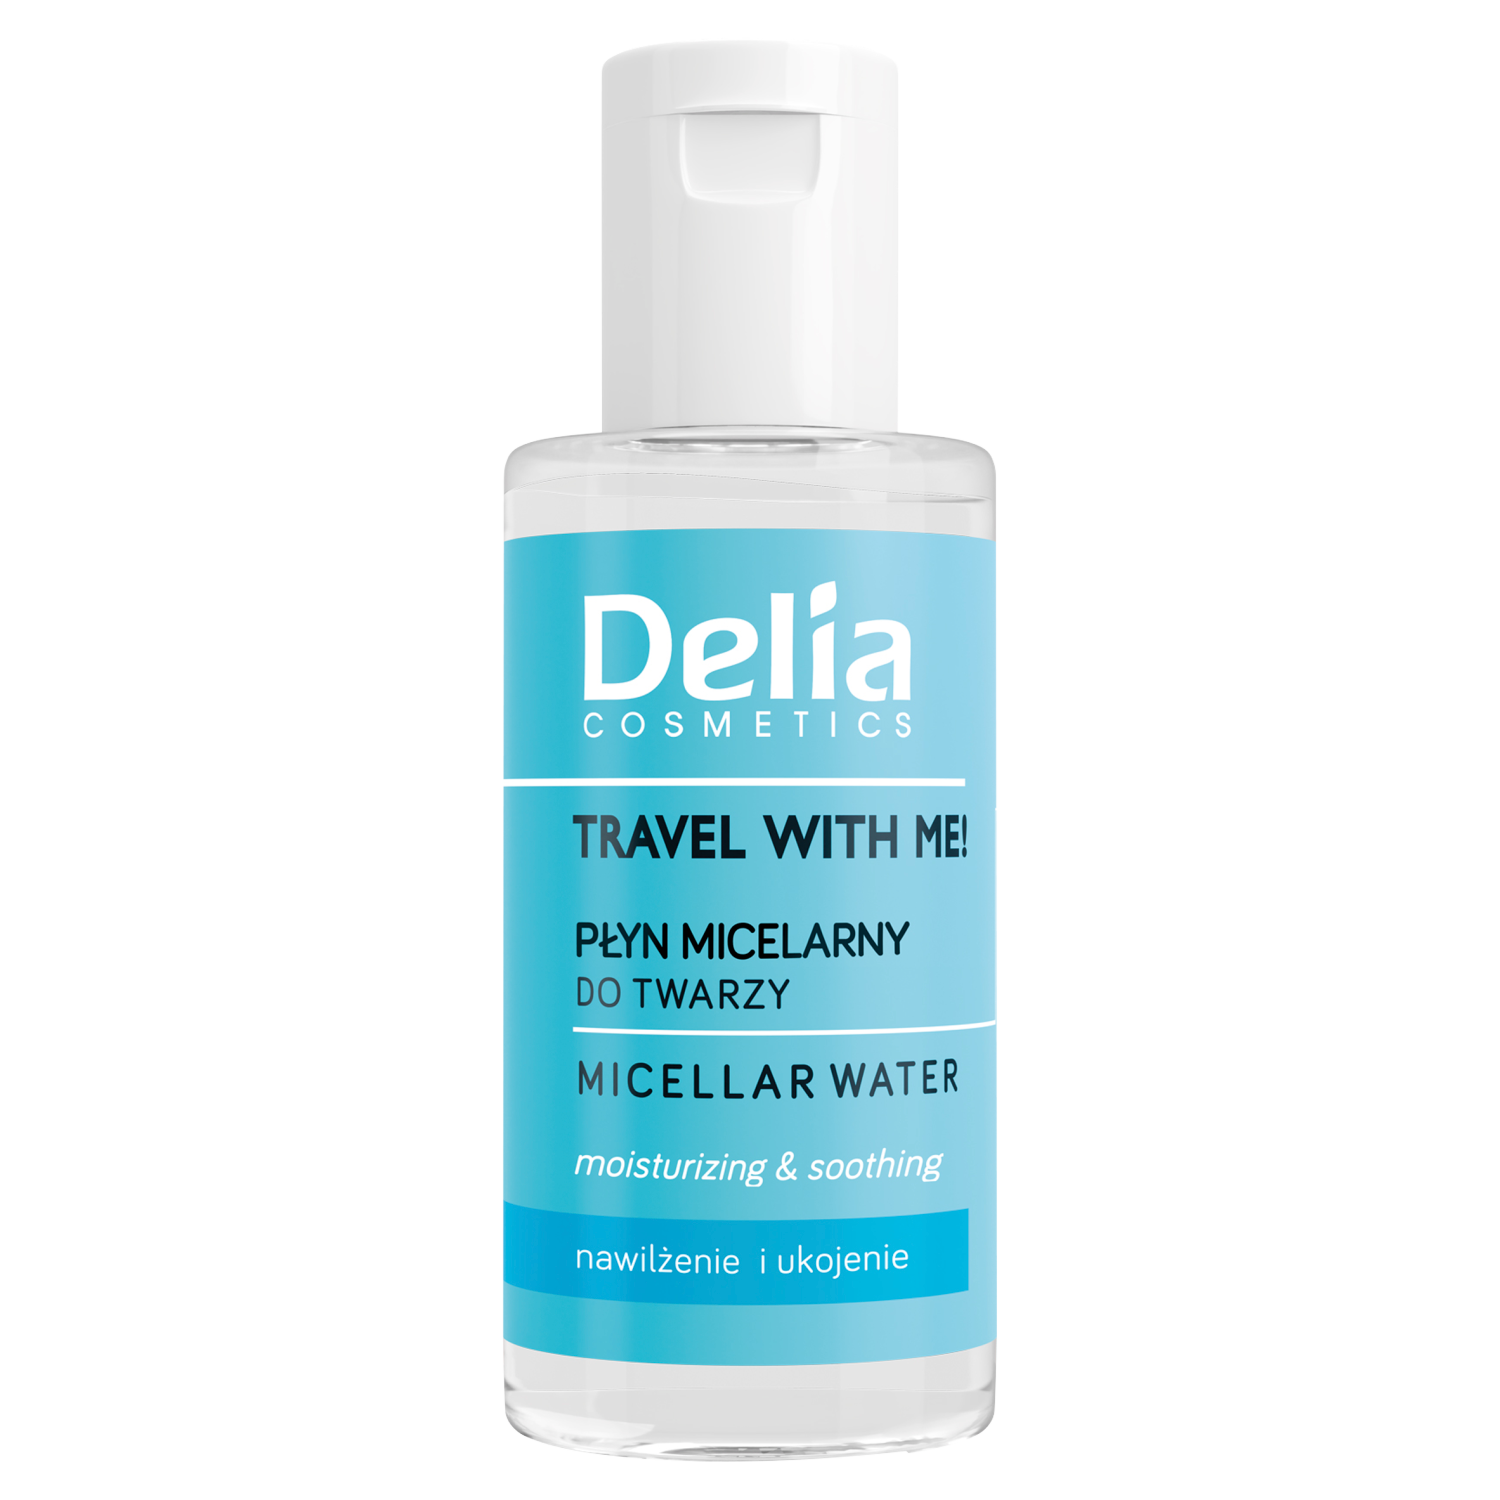 Мицеллярная жидкость для снятия макияжа Delia Travel With Me, 50 мл цена и фото